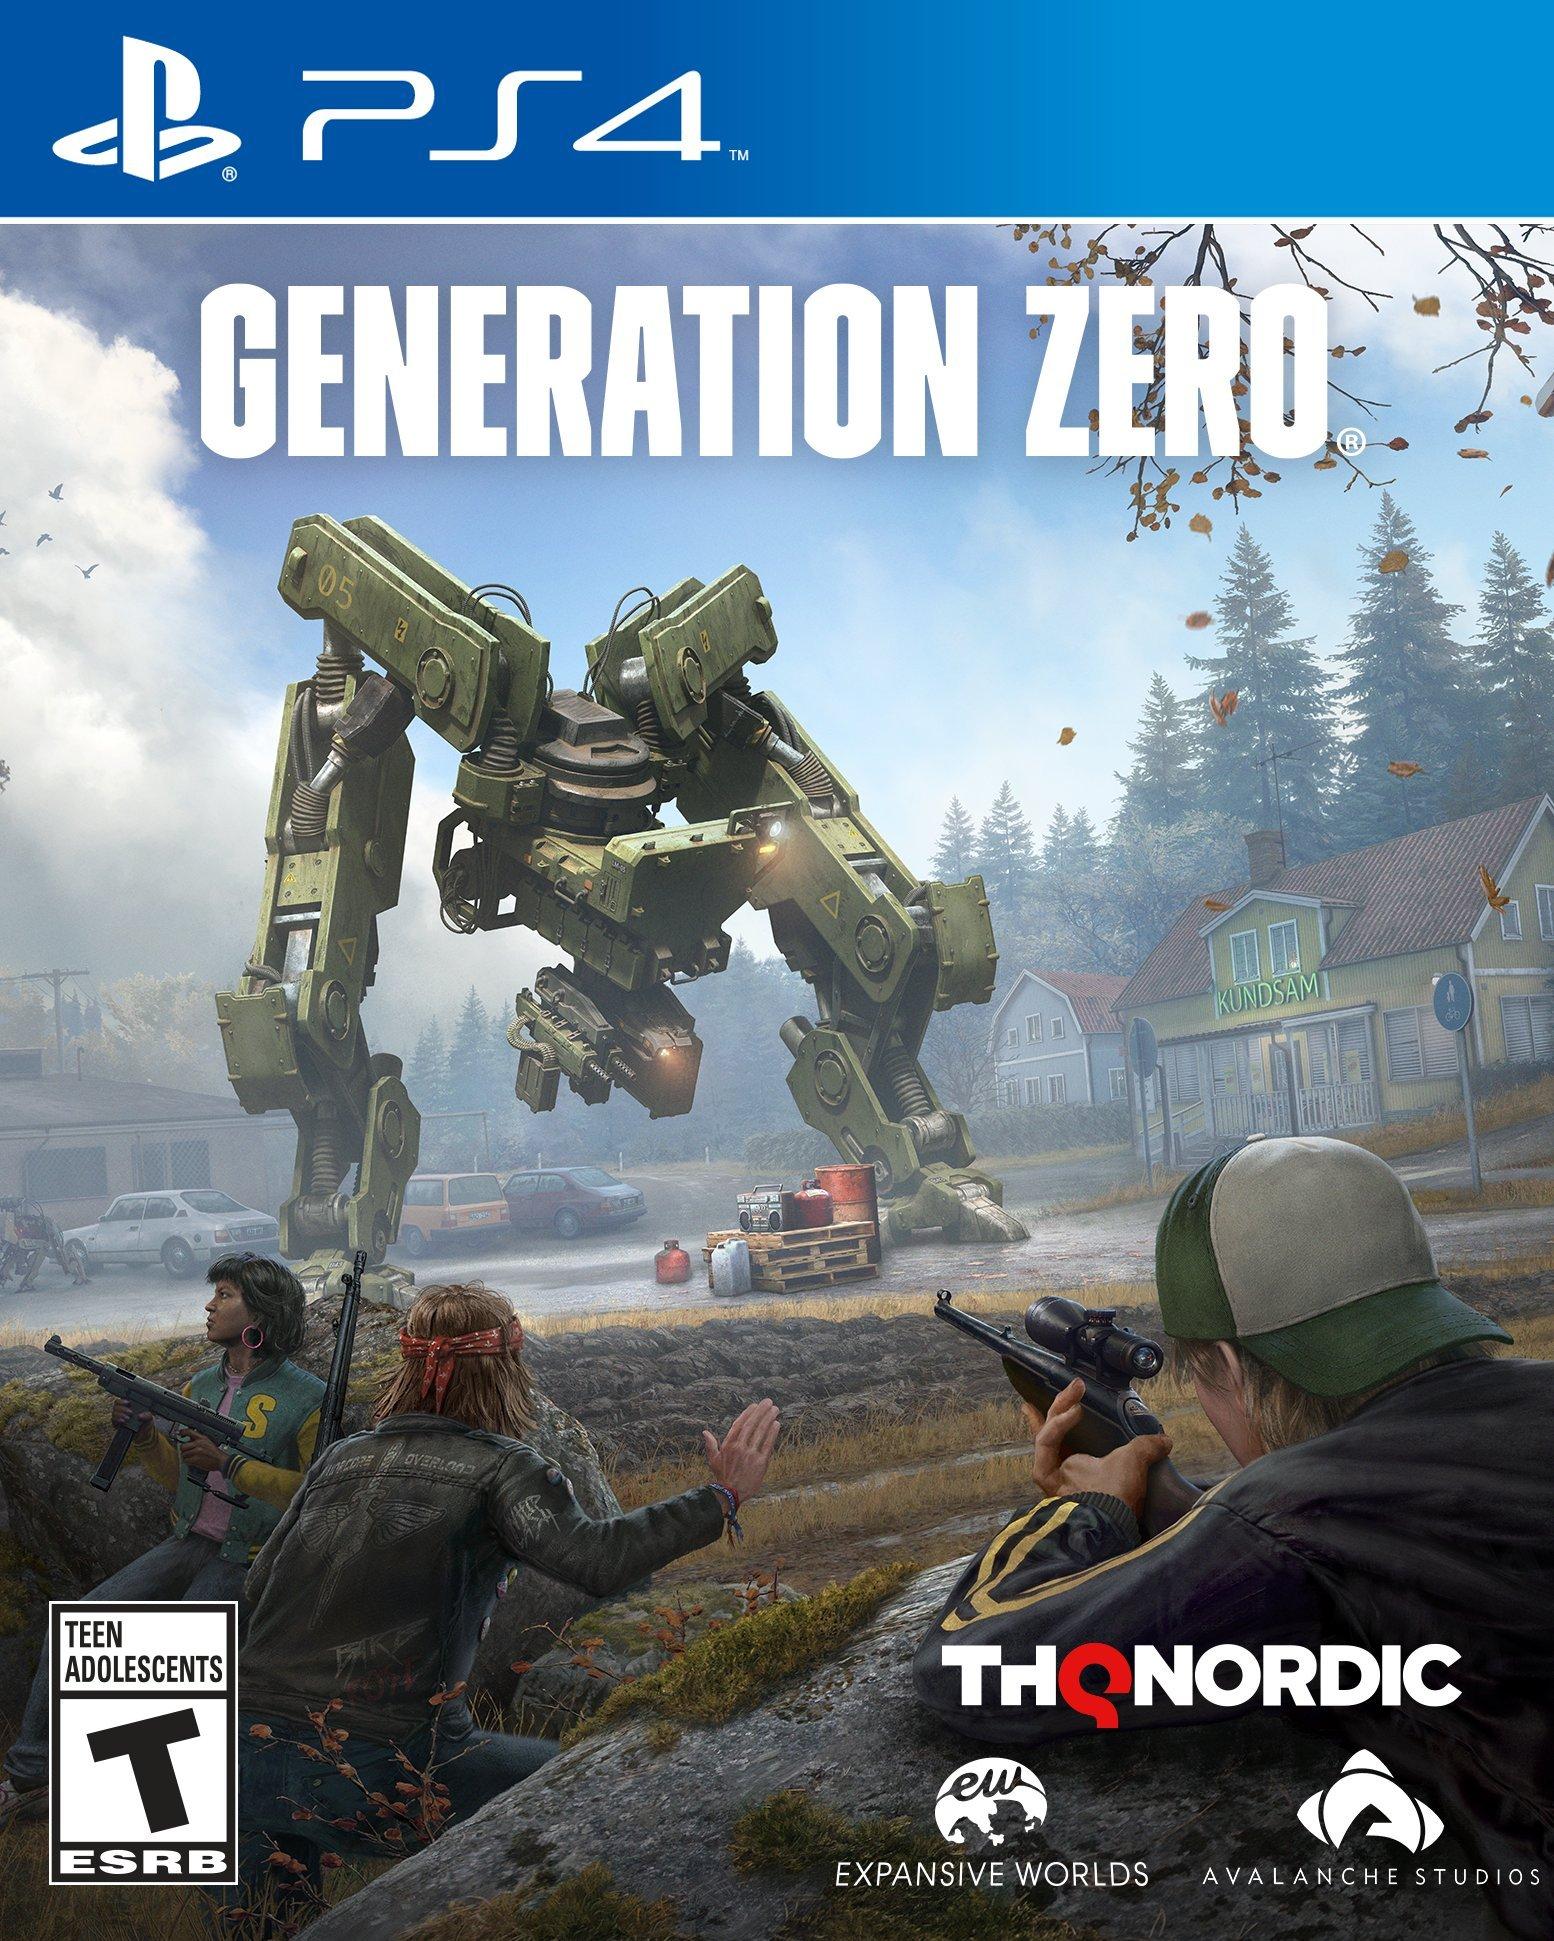 Generation Zero - PlayStation 4